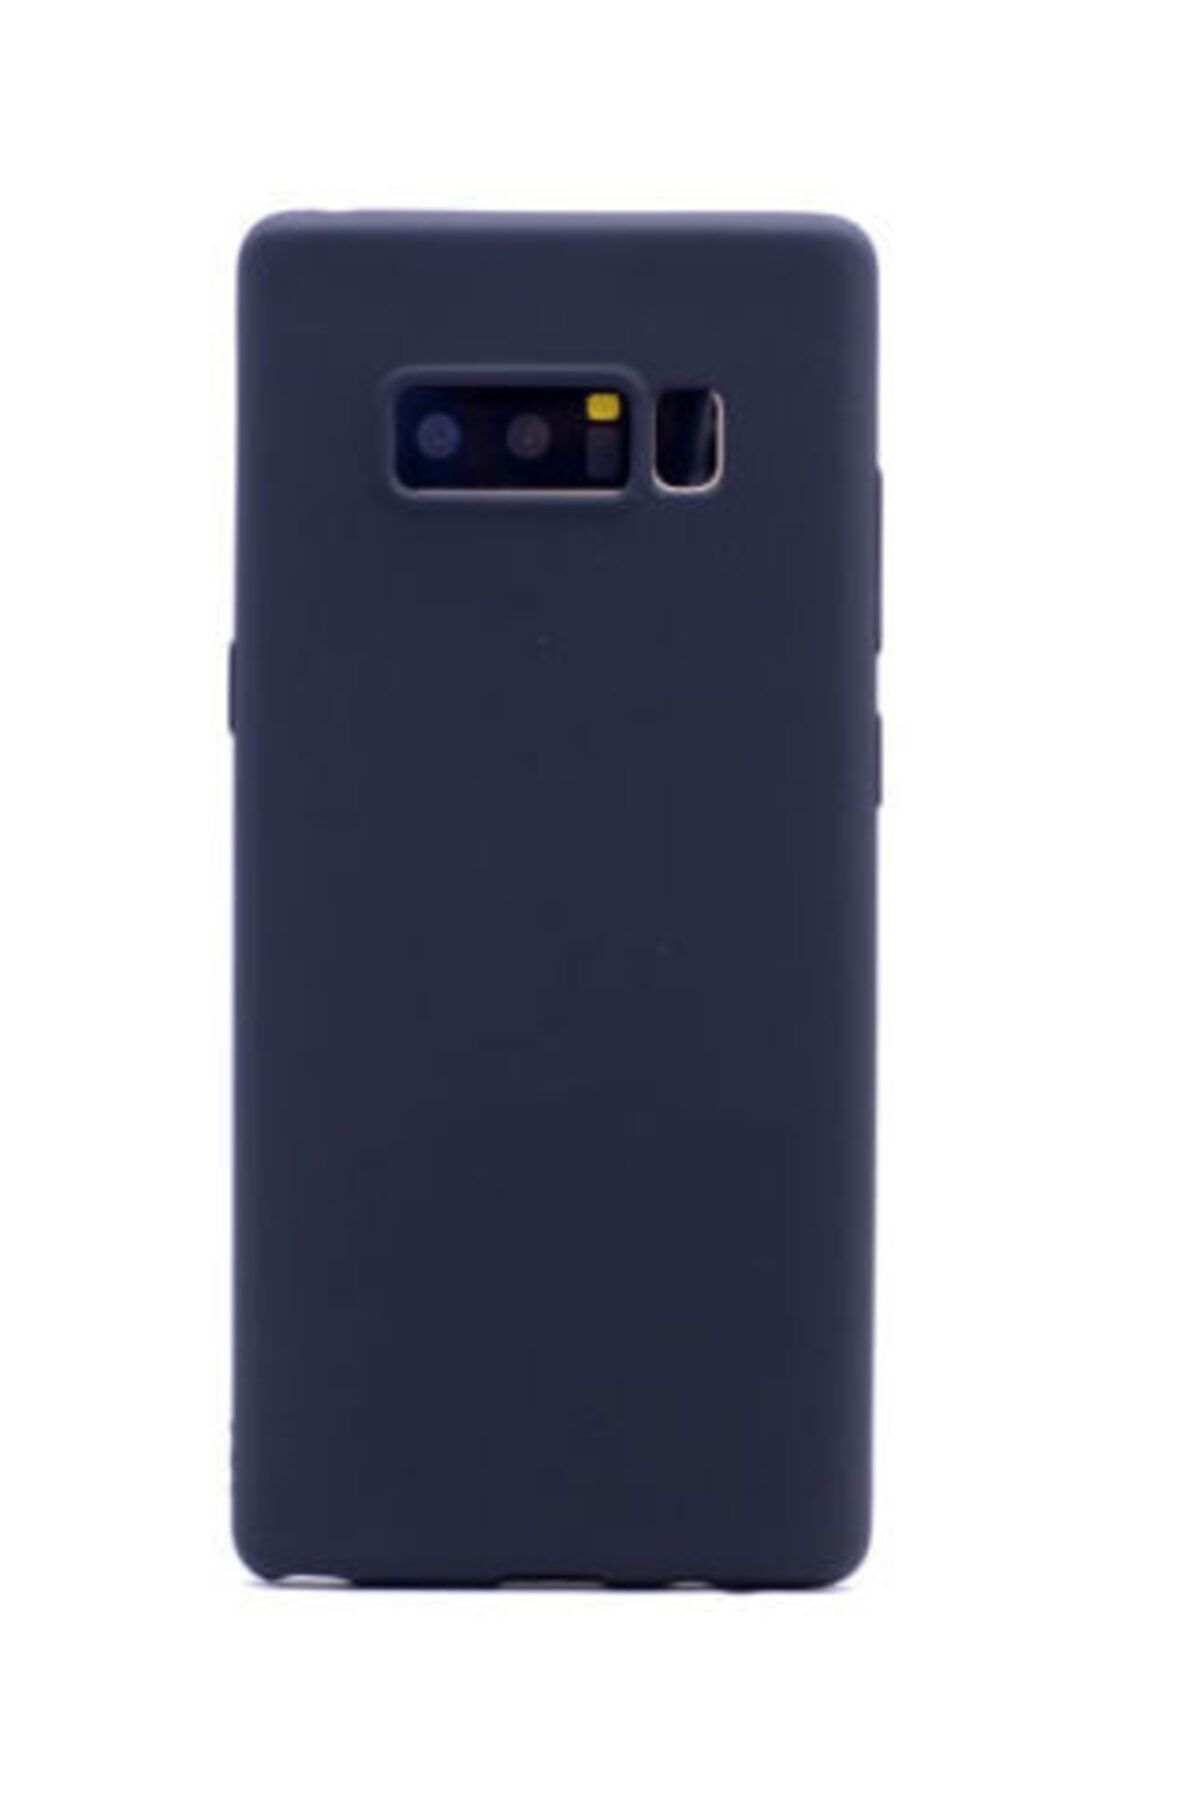 Fibaks Samsung Galaxy Note 8 Uyumlu Kılıf Yumuşak Ince Silikon Kapak